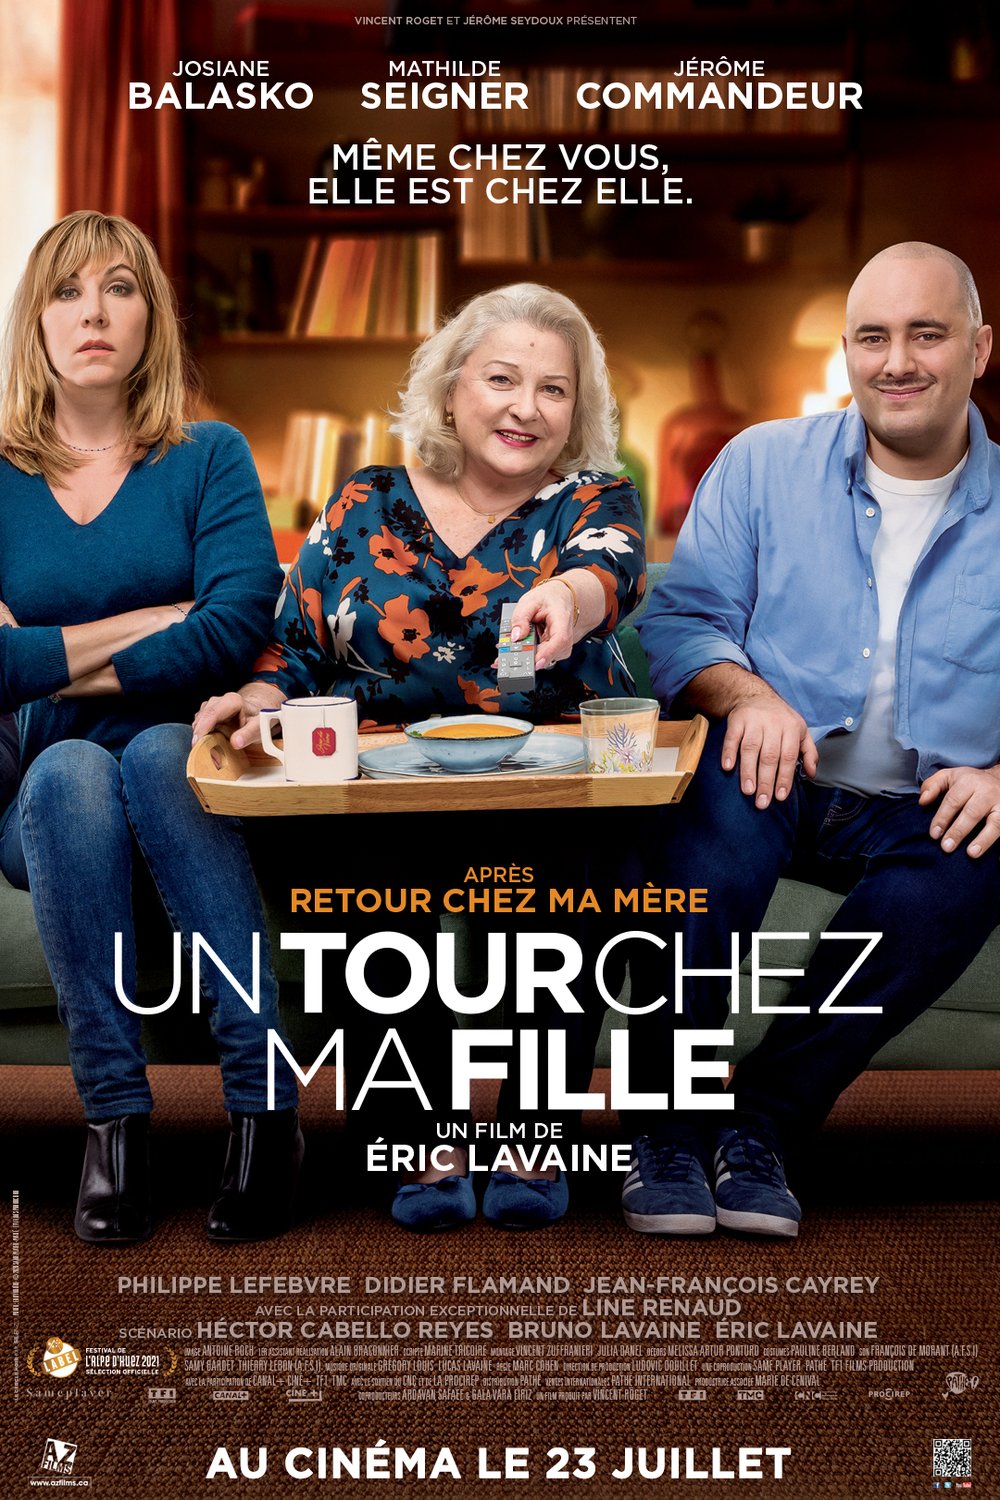 Poster of the movie Un tour chez ma fille